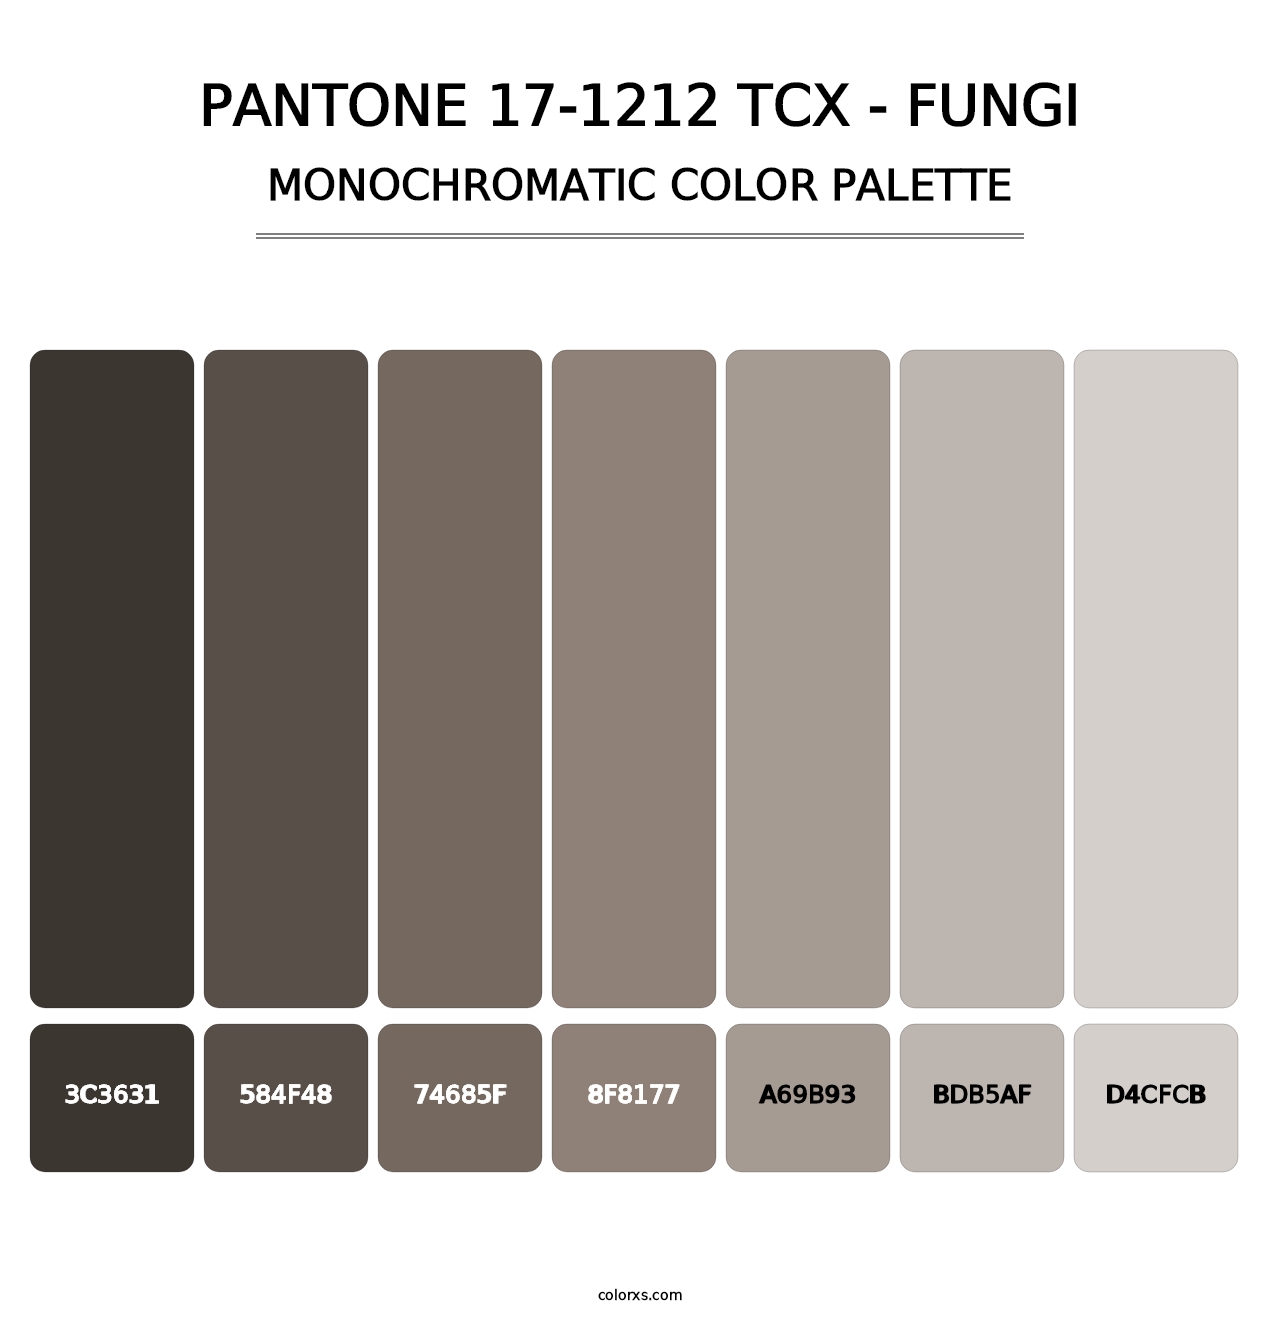 PANTONE 17-1212 TCX - Fungi - Monochromatic Color Palette